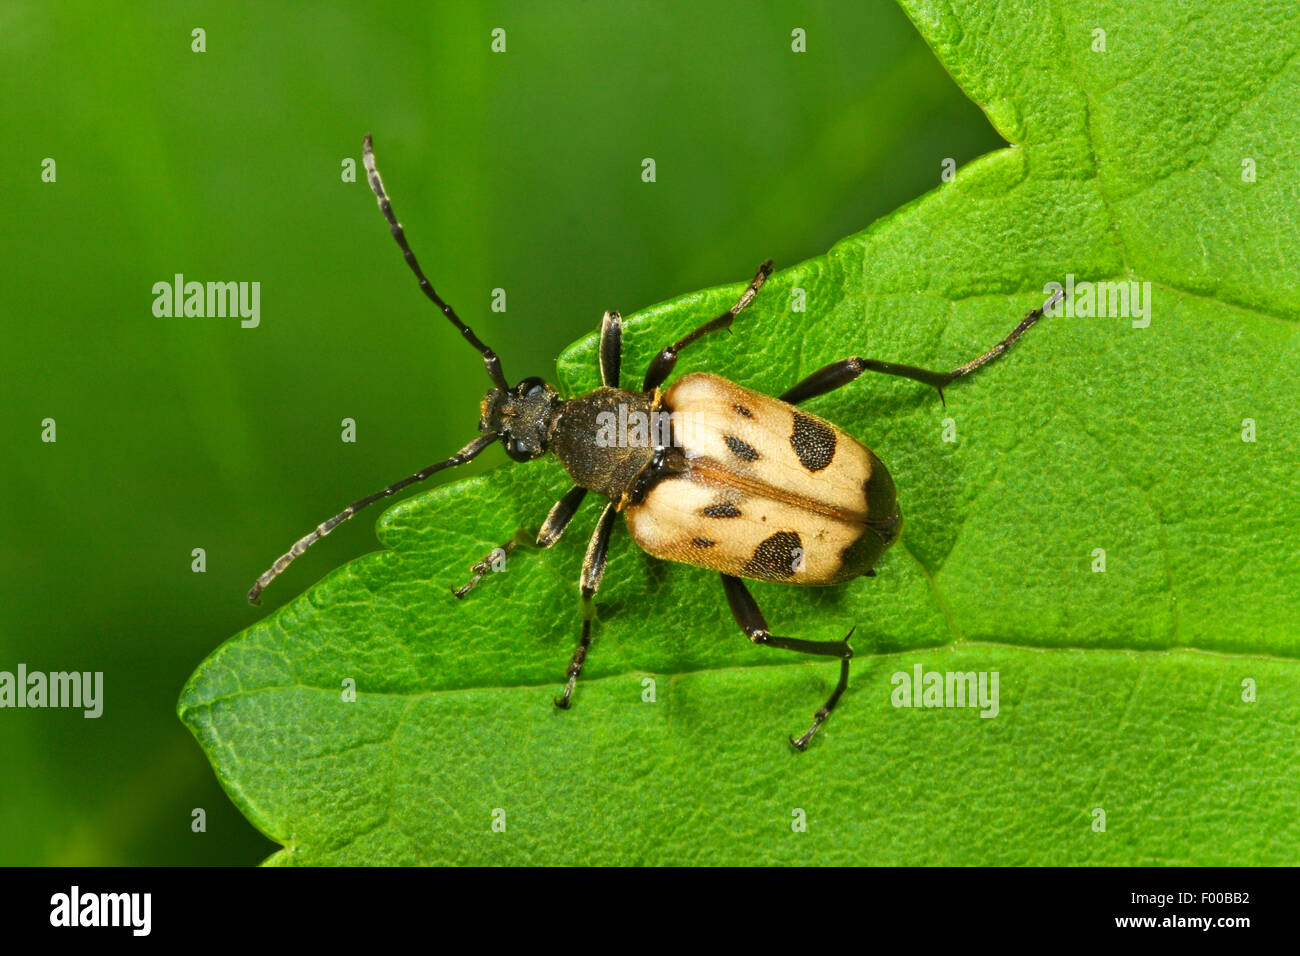 Speckled Longhorn Beetle (Pachytodes cerambyciformis, Judolia cerambyciformis), on a leaf, Germany Stock Photo